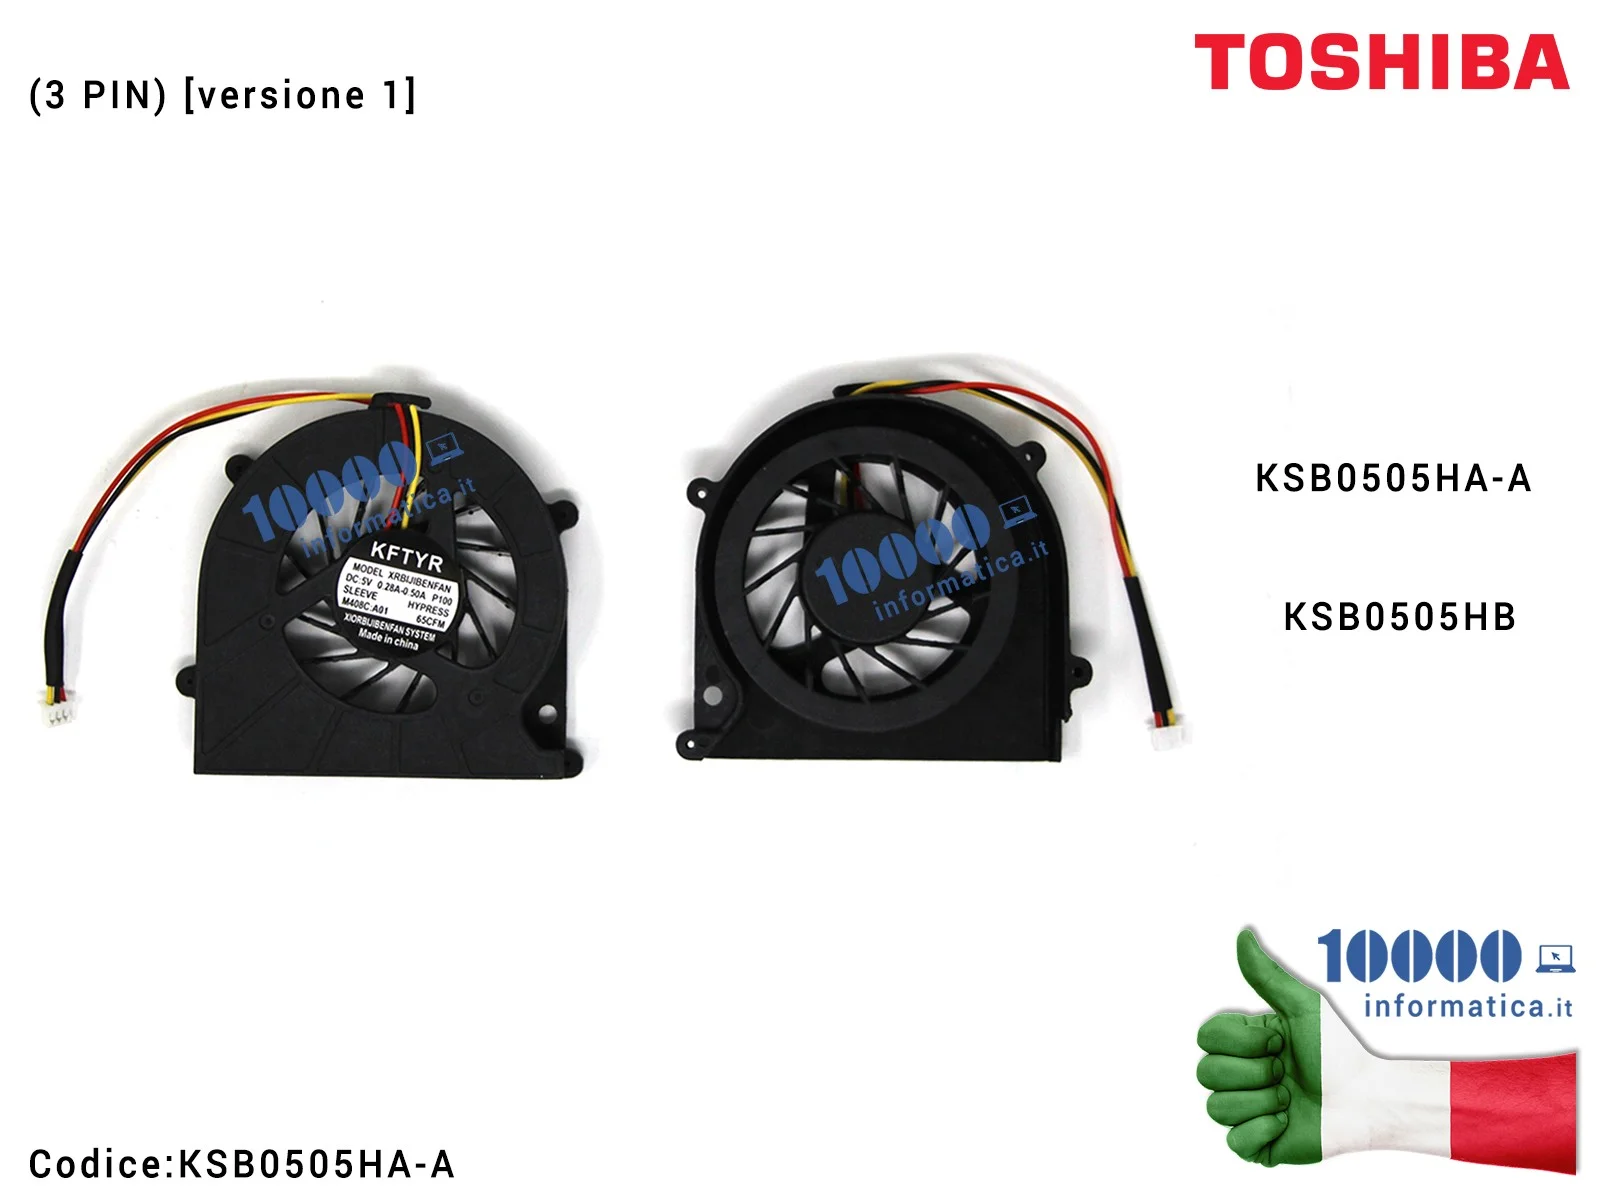 KSB0505HA-A Ventola Fan TOSHIBA Satellite L630 (3 PIN) (versione 1) KSB0505HA-A KSB0505HB